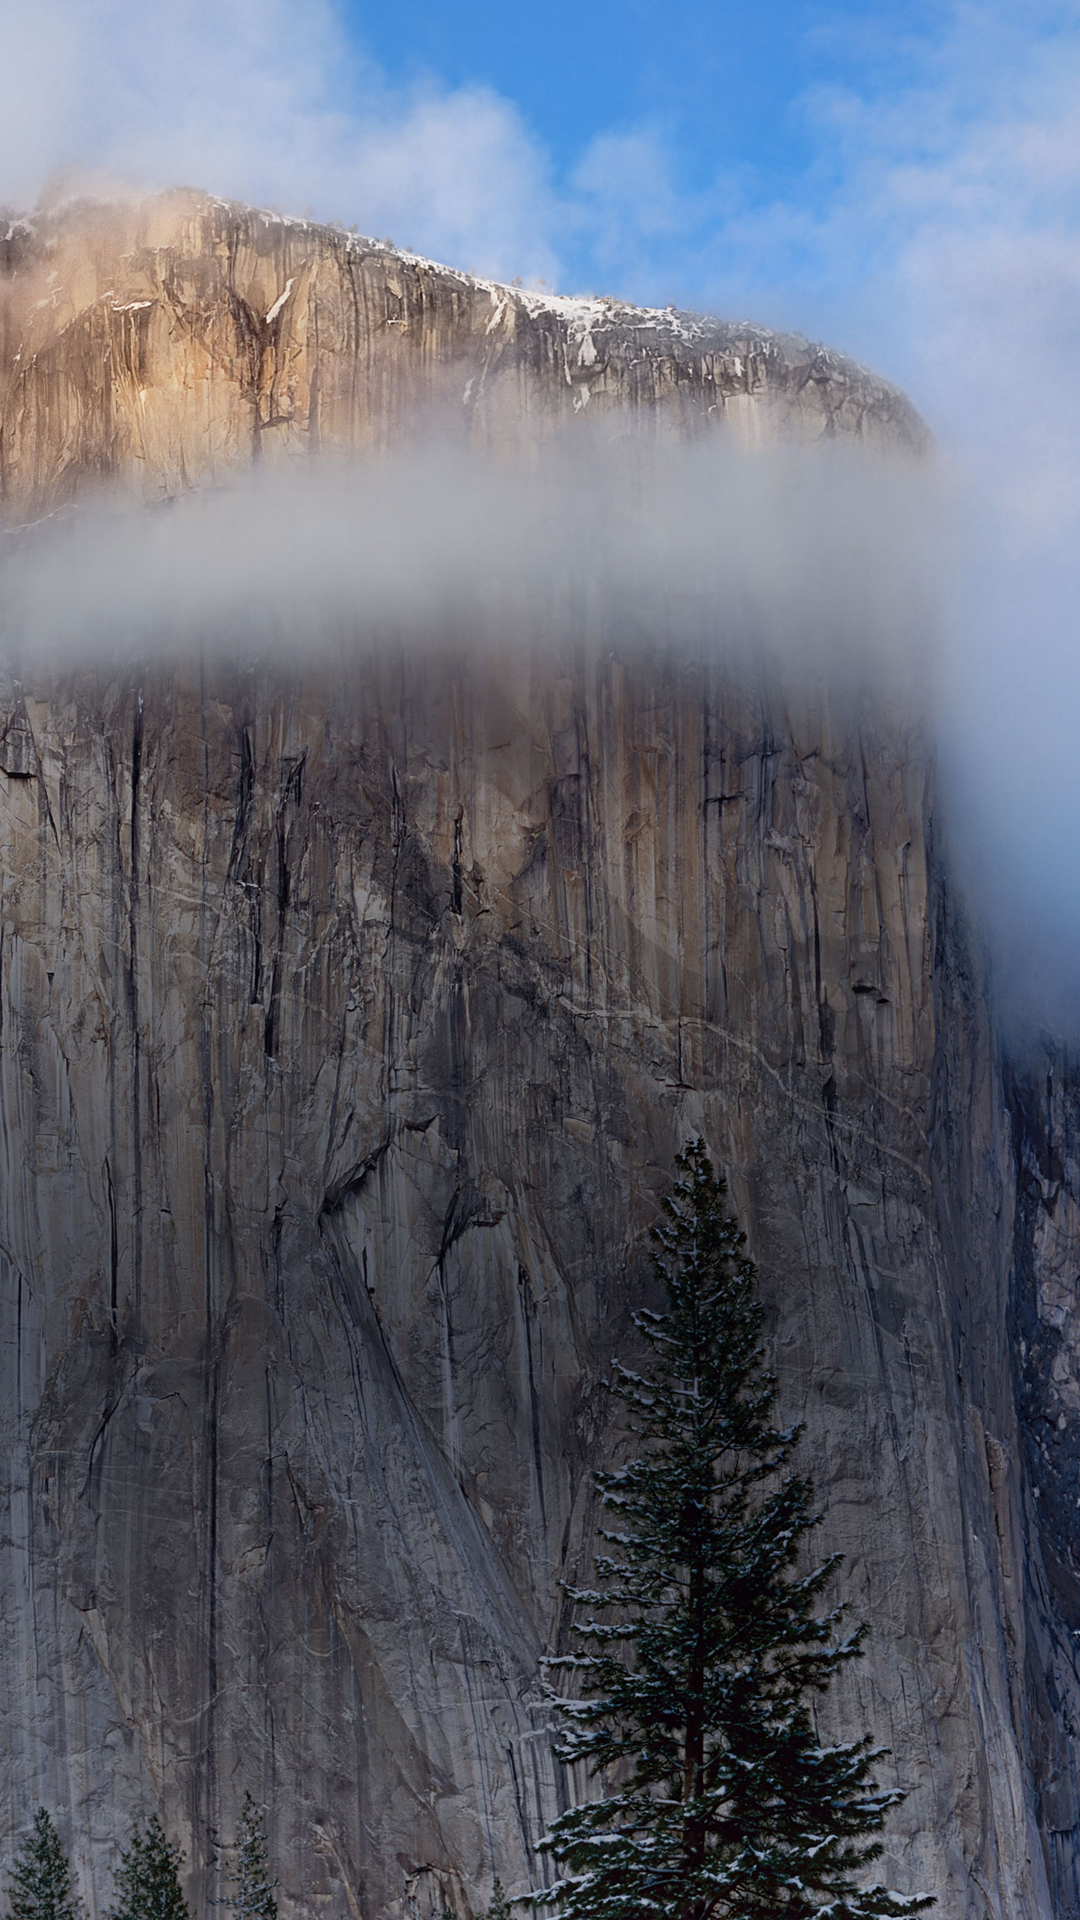 Mac Osx Yosemite Cliff iPhone Plus HD Wallpaper Ipod